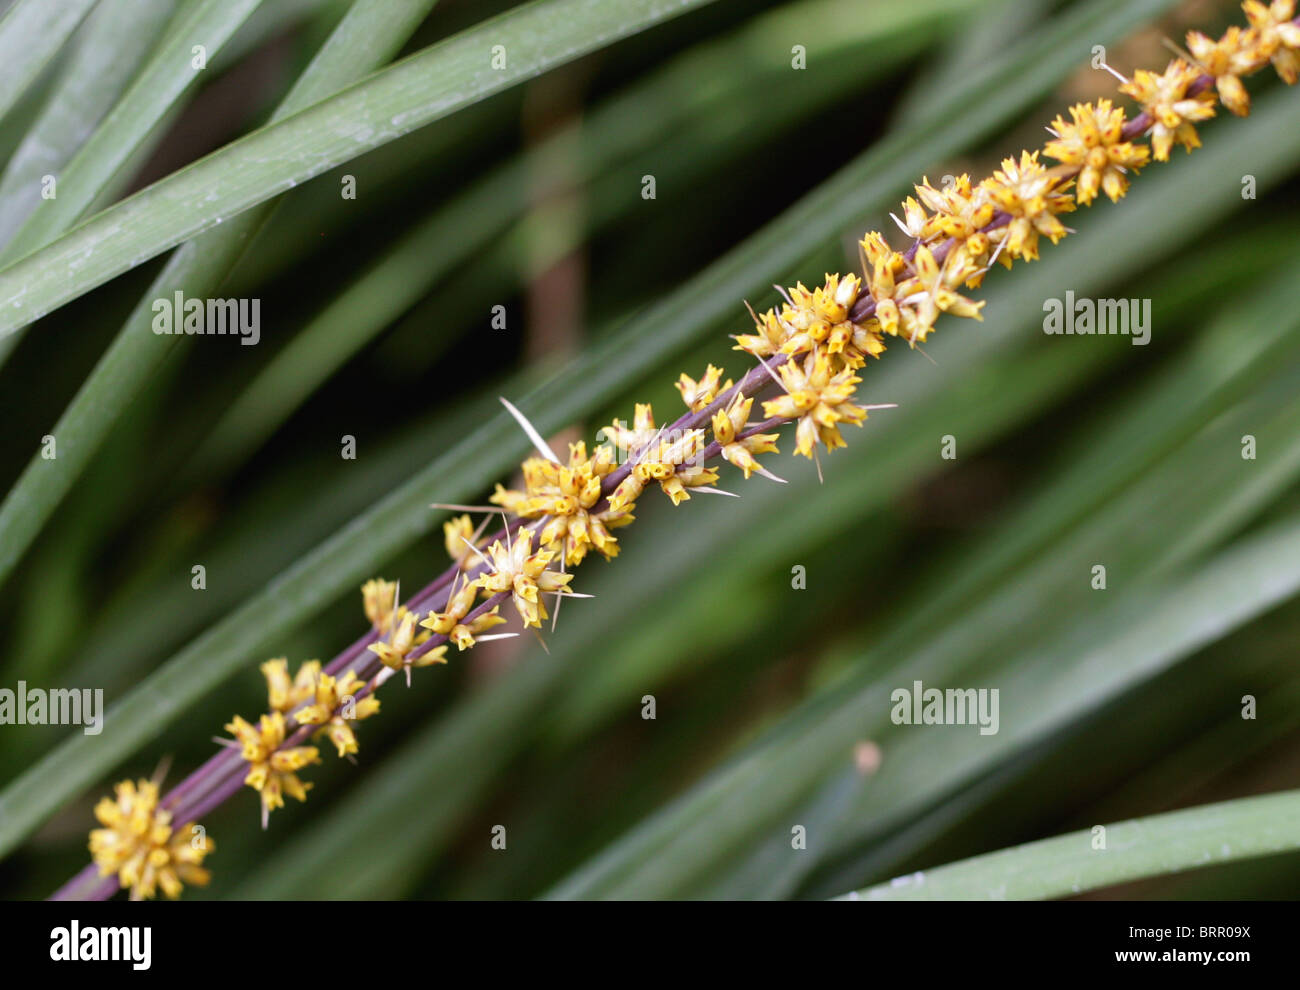 Spiny-Headed Mat-Rush, Lomandra longifolia, Asparagaceae (Laxmanniaceae, Lomandraceae), Australia. Stock Photo